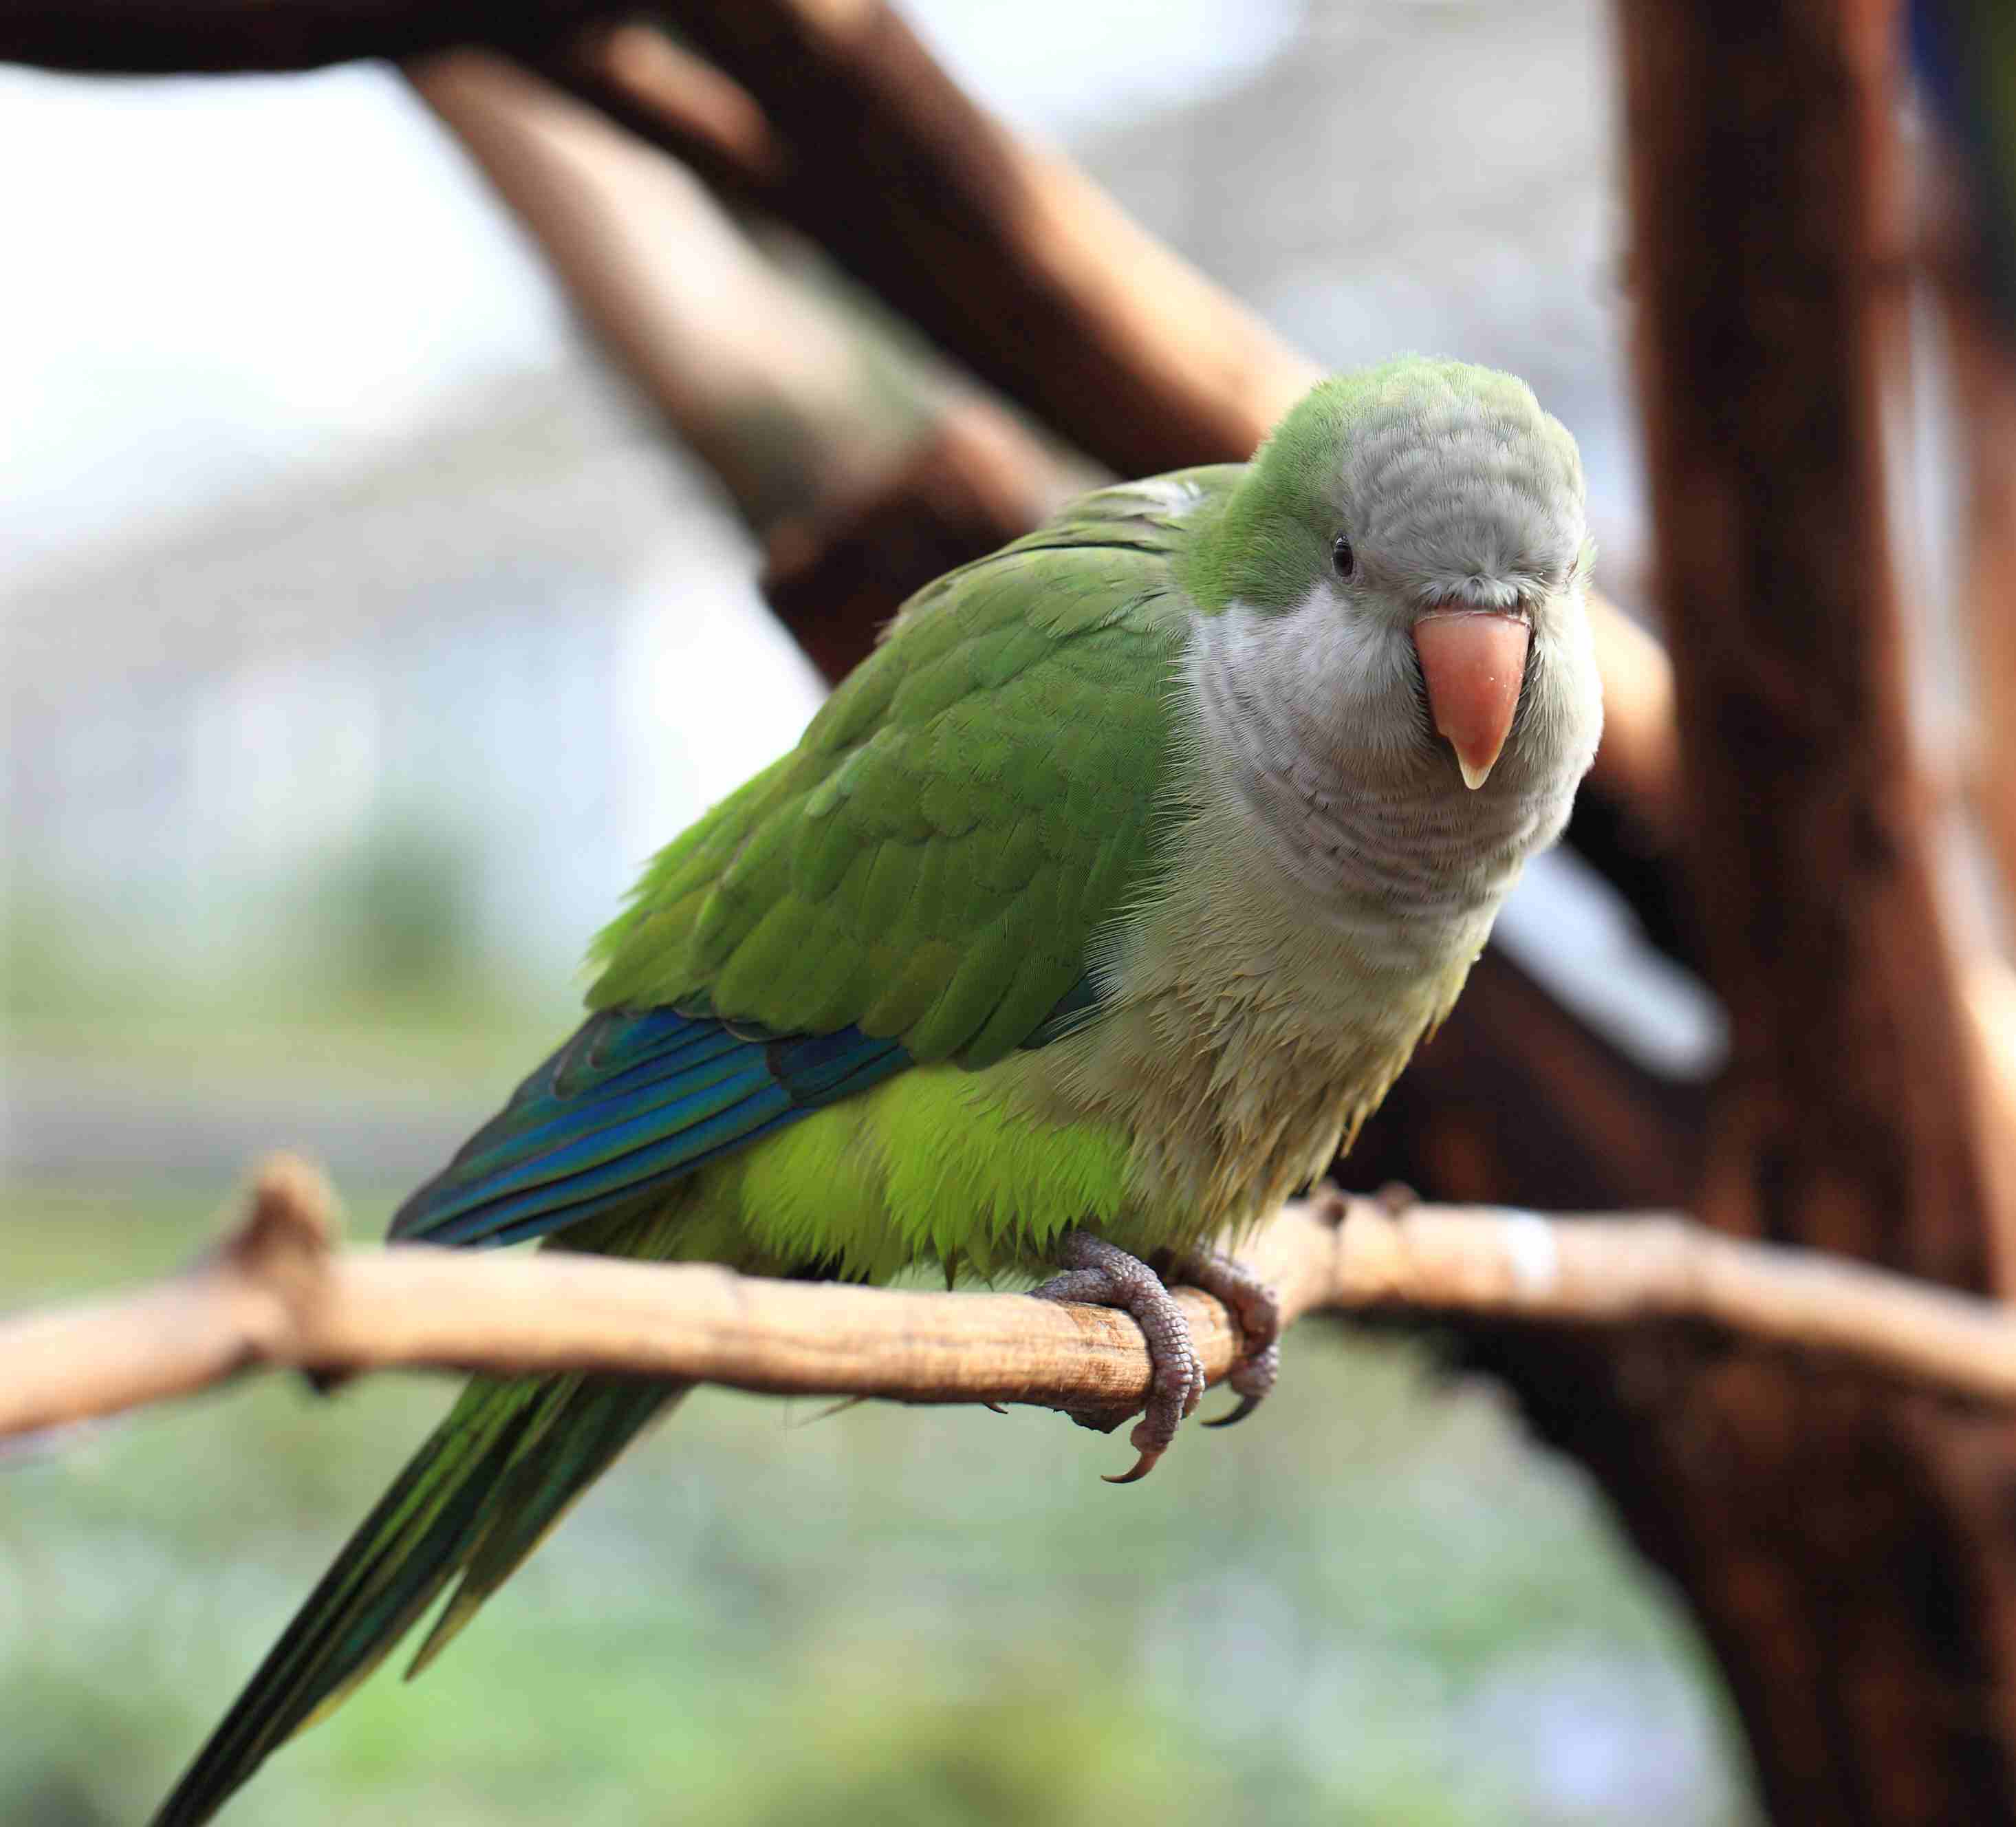 Quaker parrot on a branch